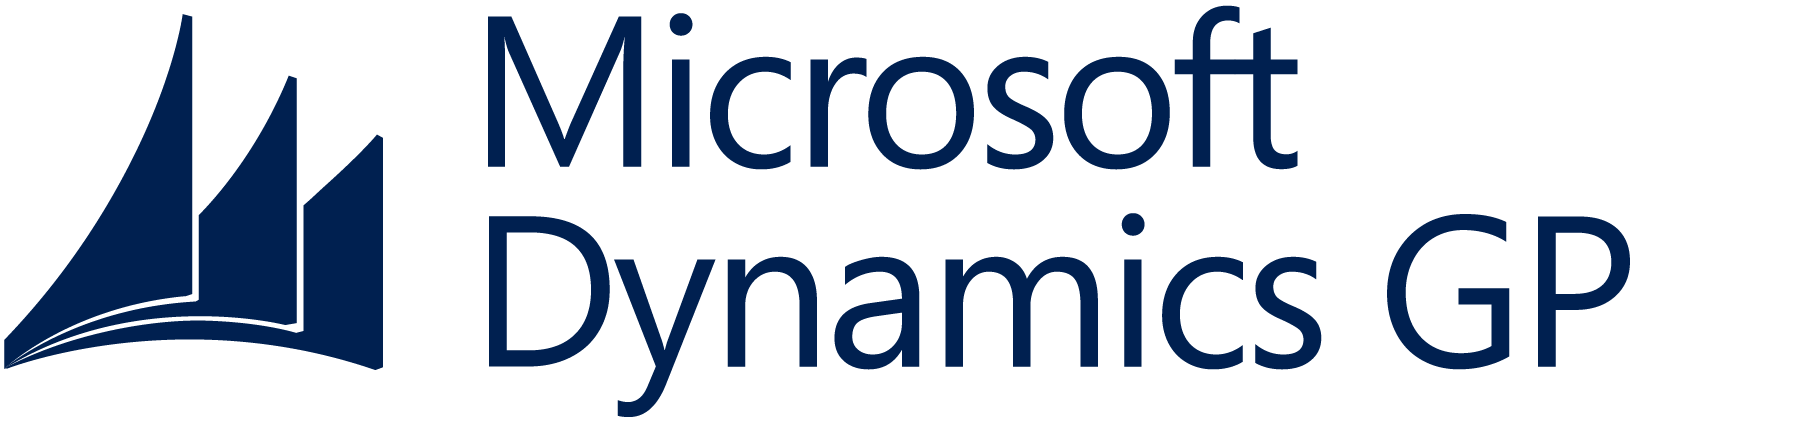 Microsoft CRM Logo - Revisited: GP Logos through the years - Microsoft Dynamics GP Community